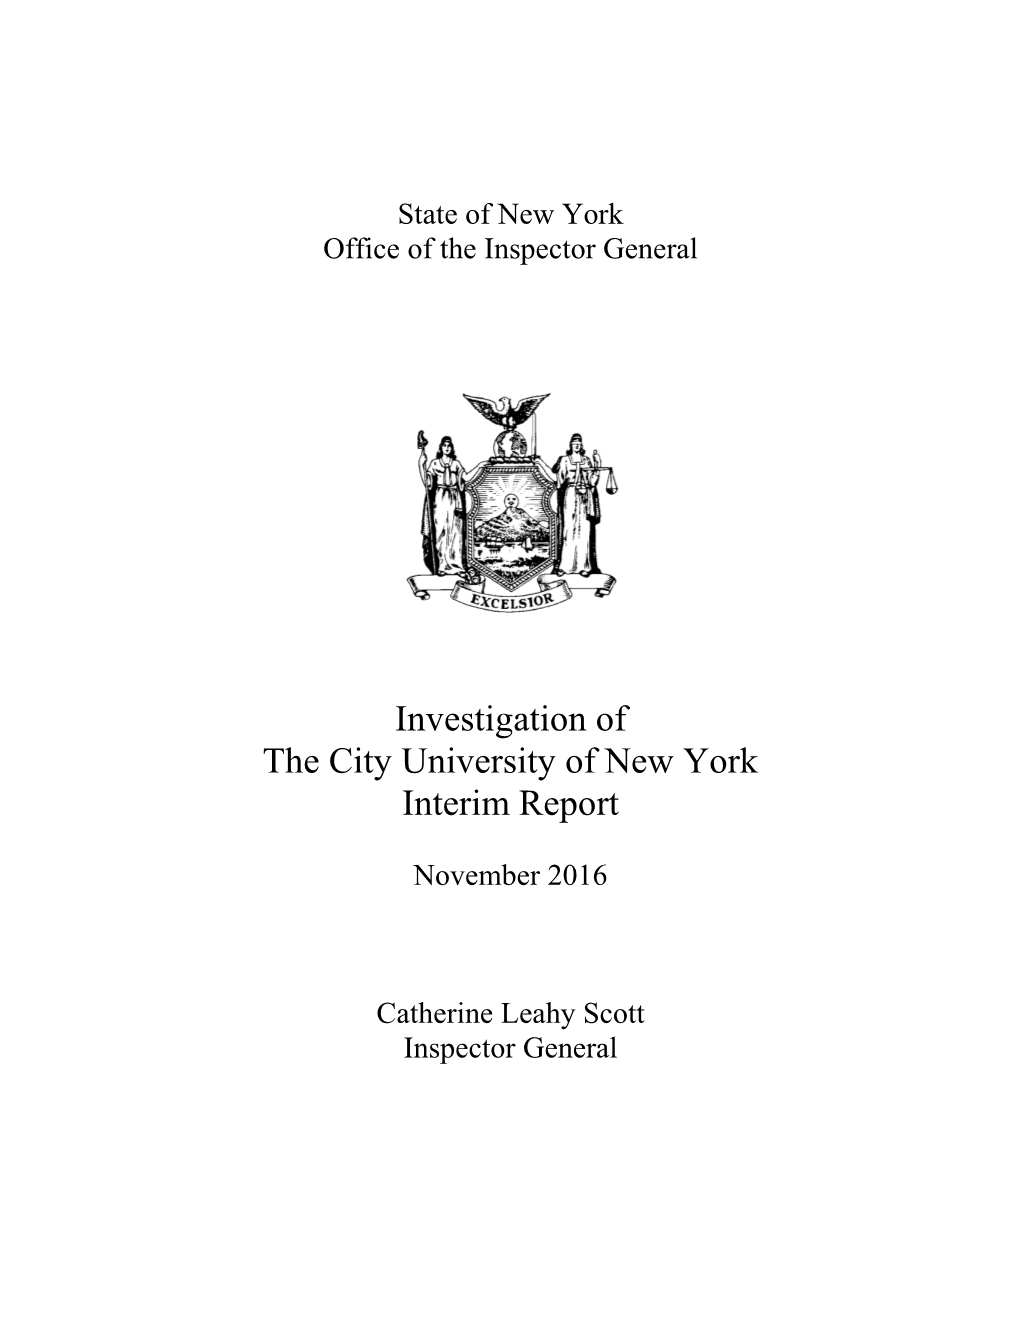 Investigation of the City University of New York Interim Report